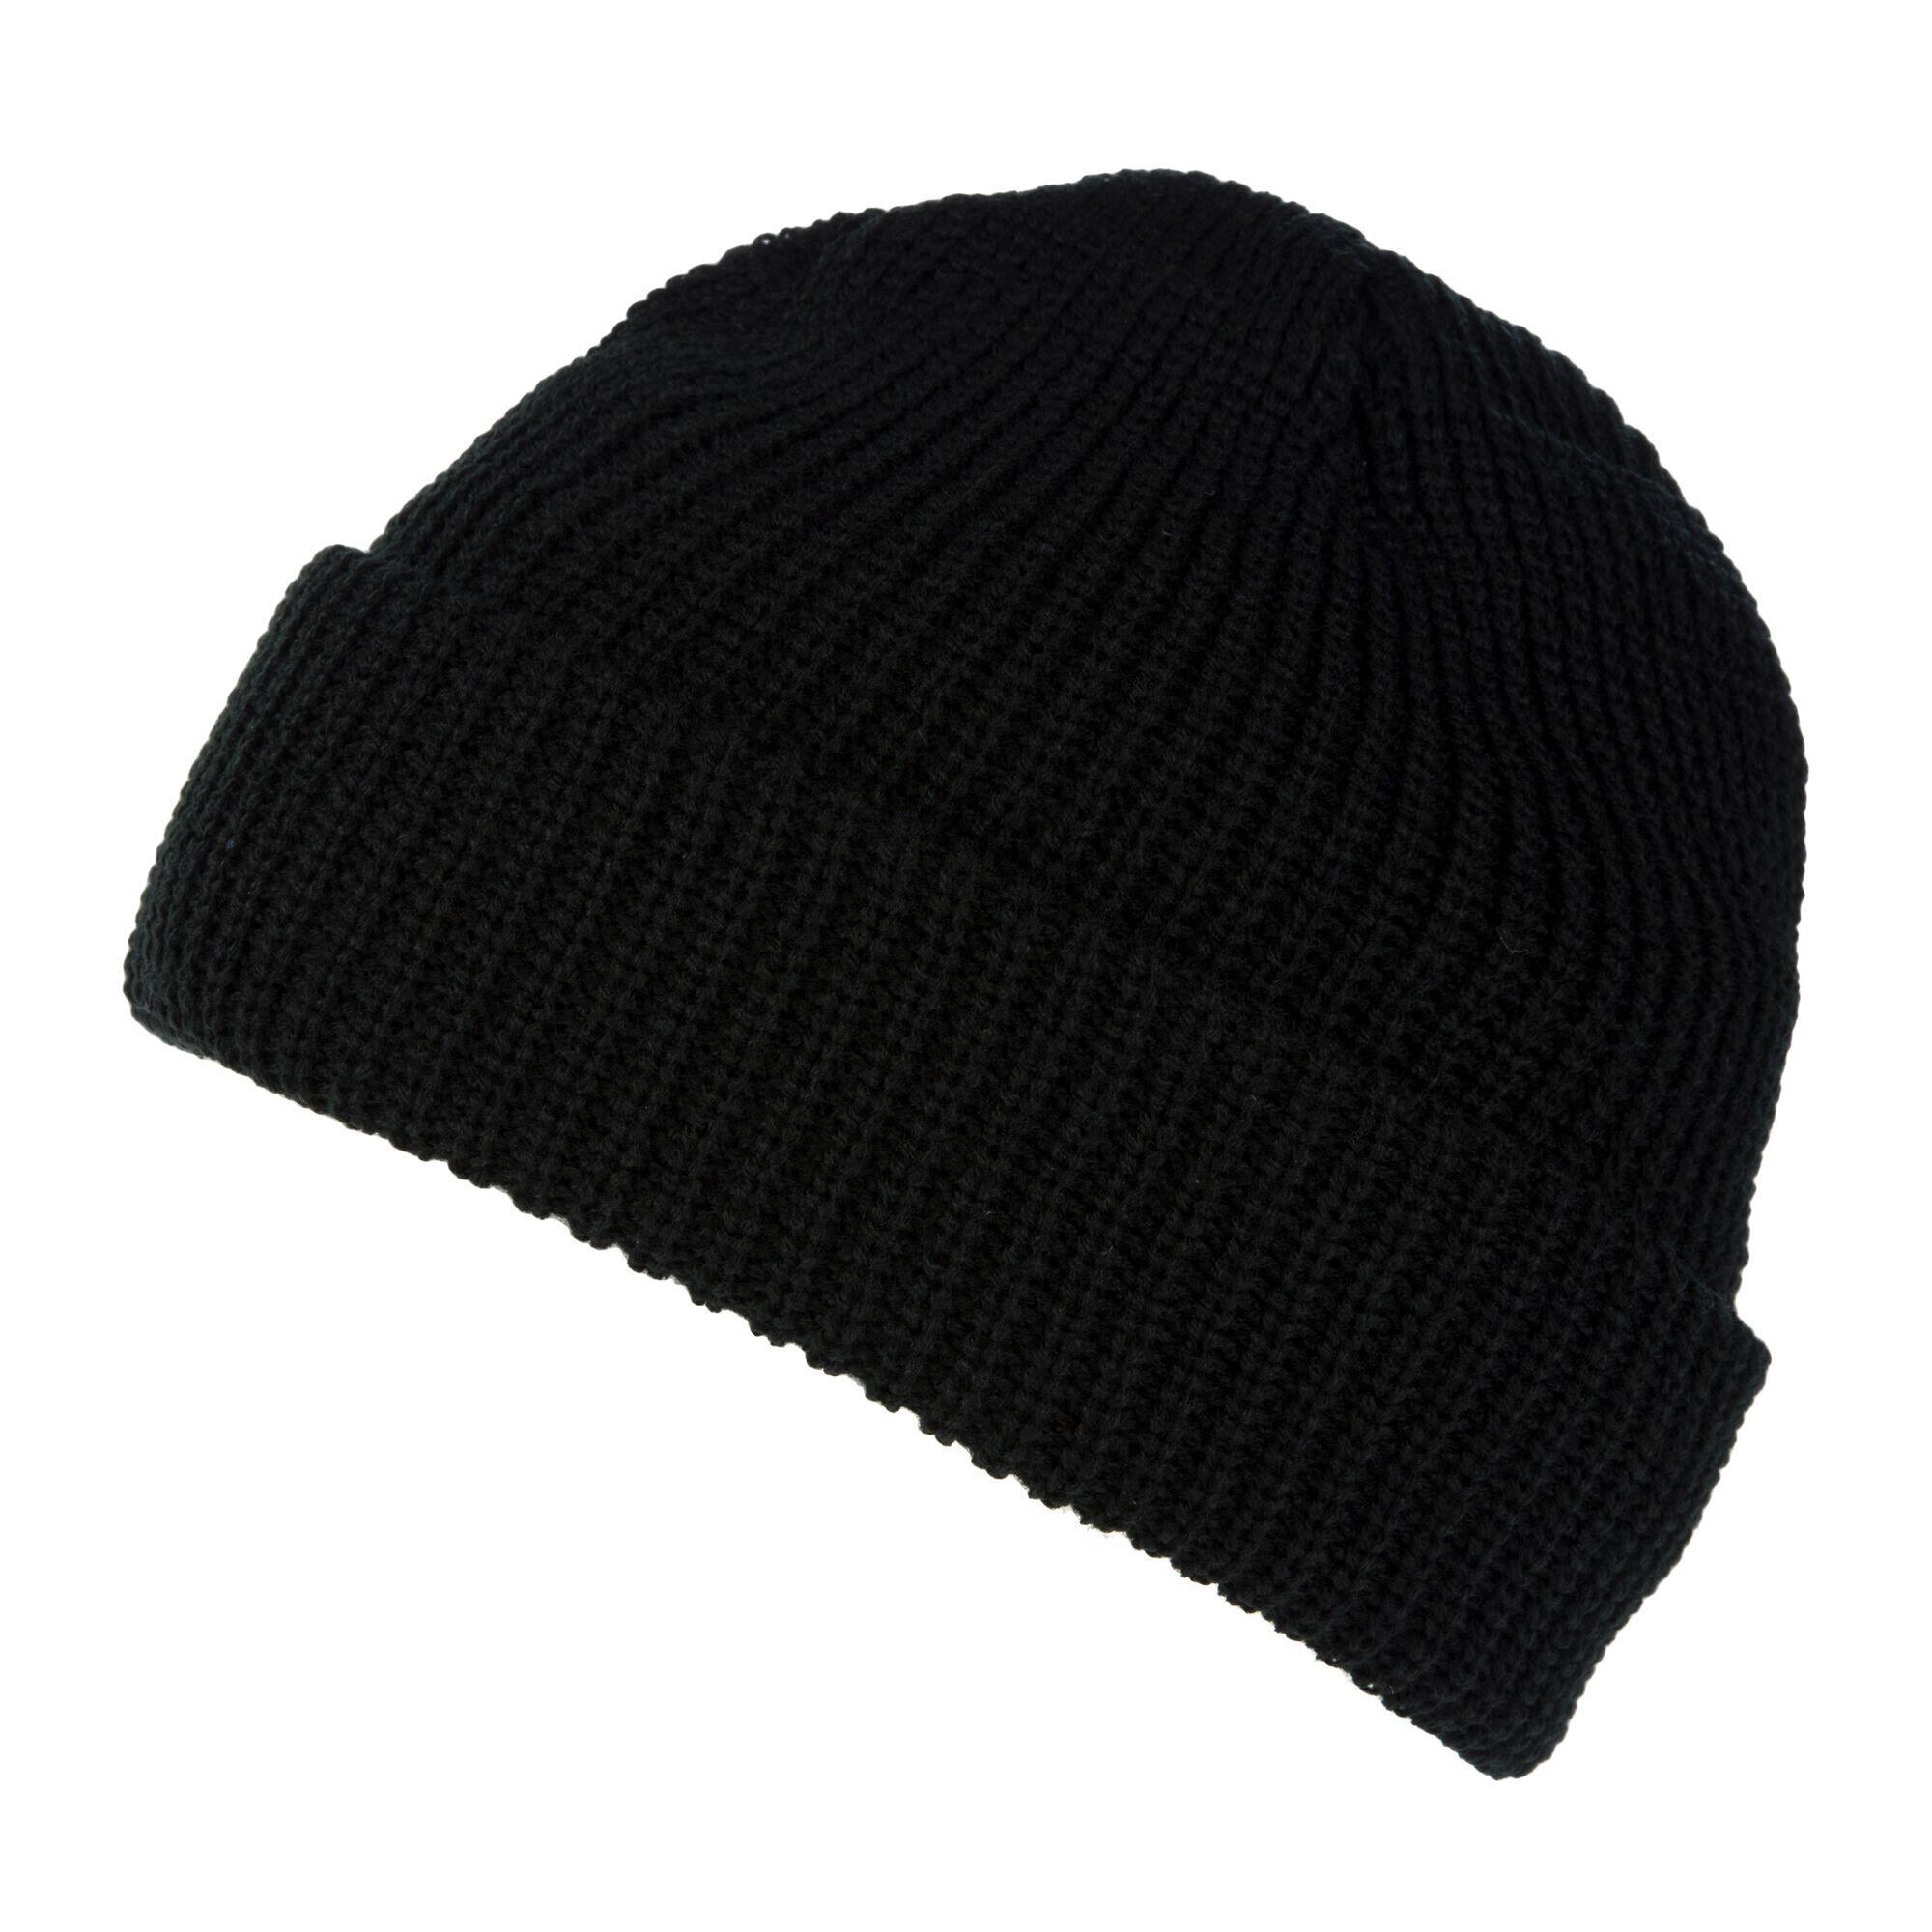 Unisex Fully Ribbed Winter Watch Cap / Hat (Black) 3/4